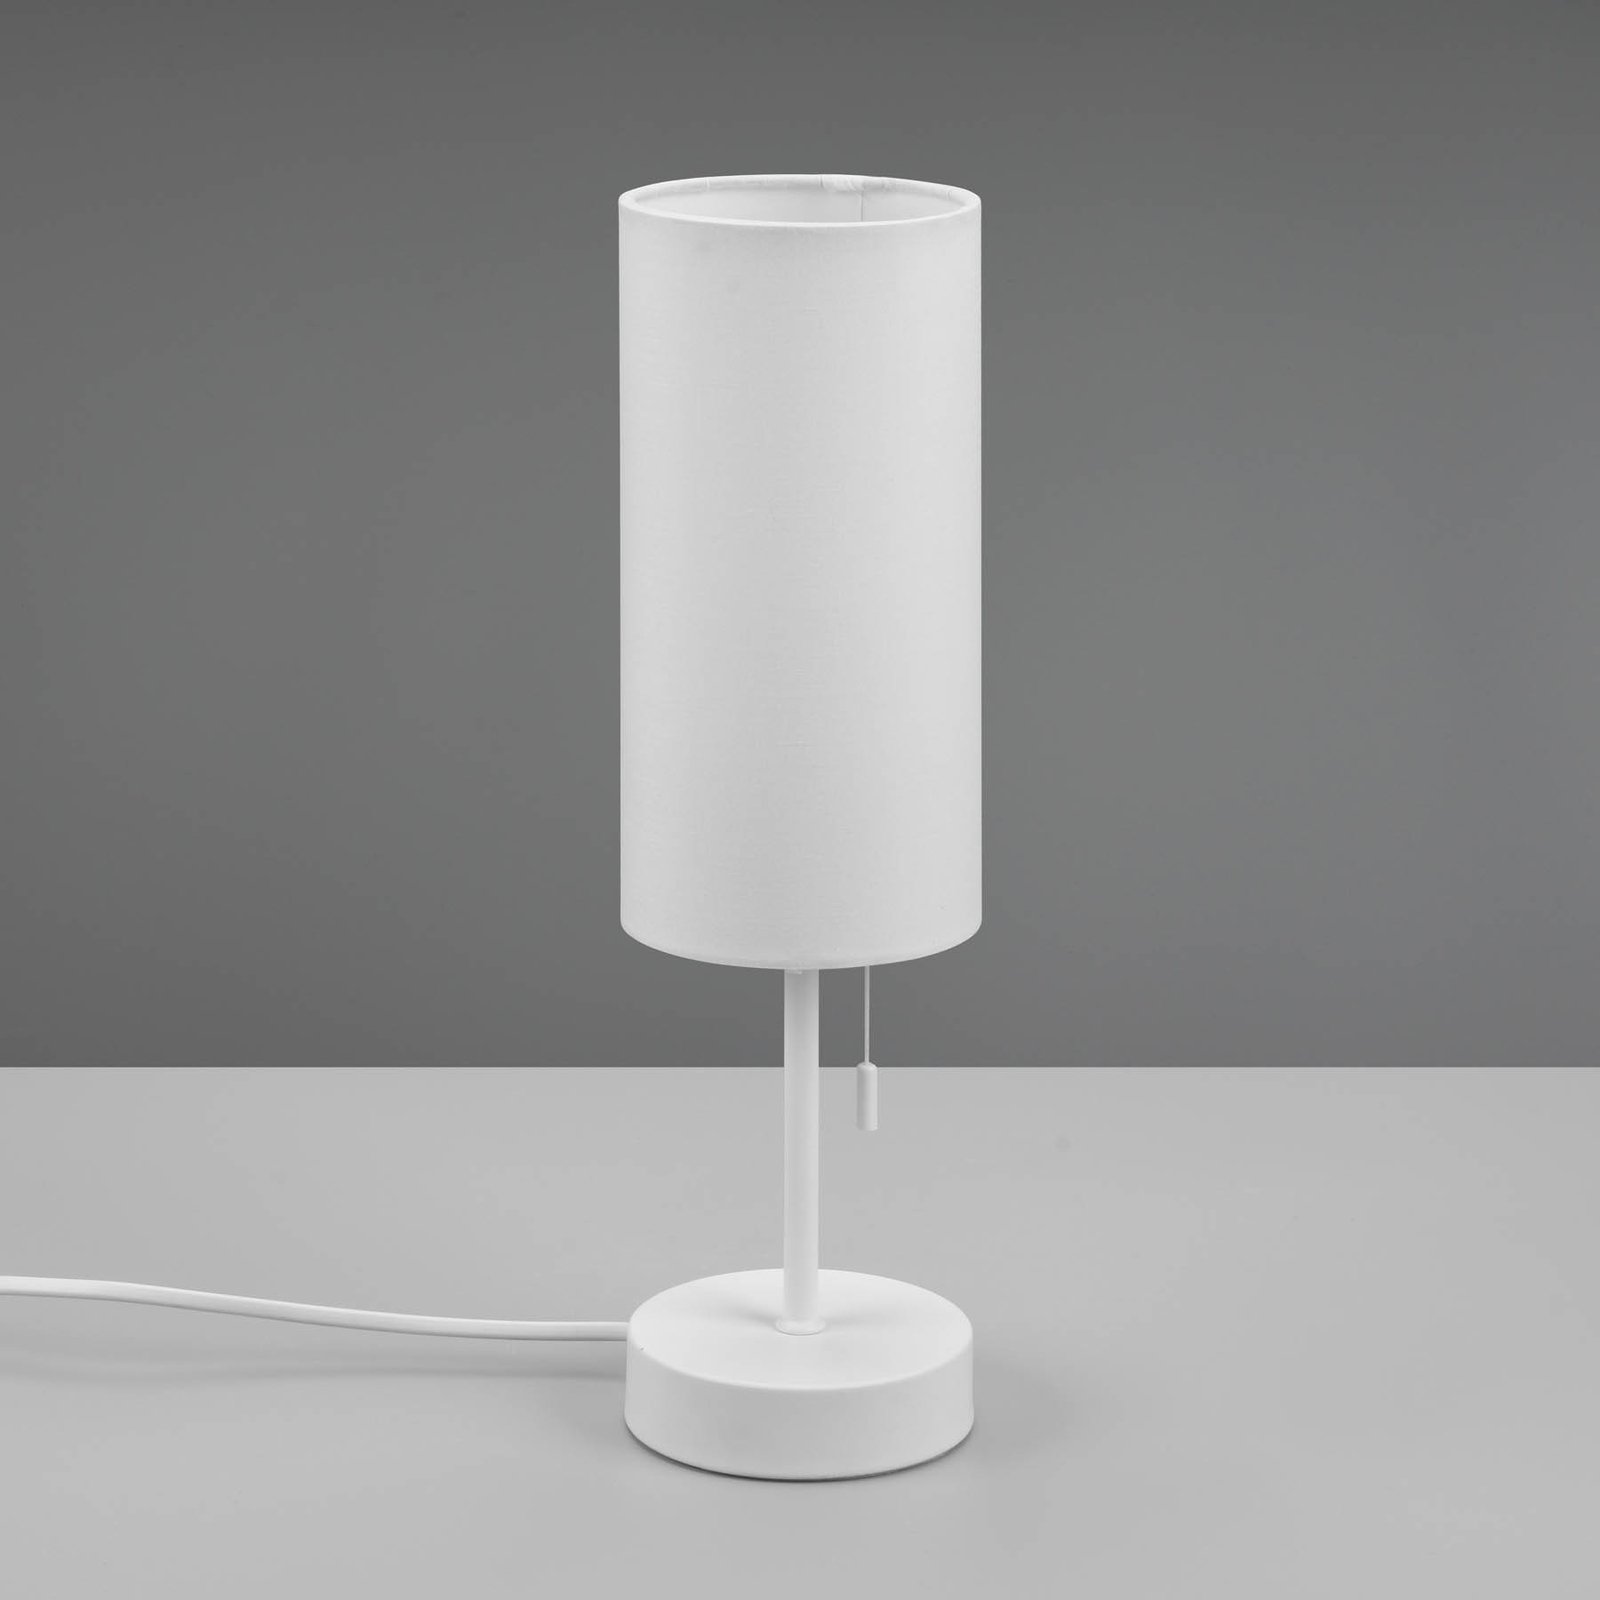 Jaro table lamp with USB port, white/white